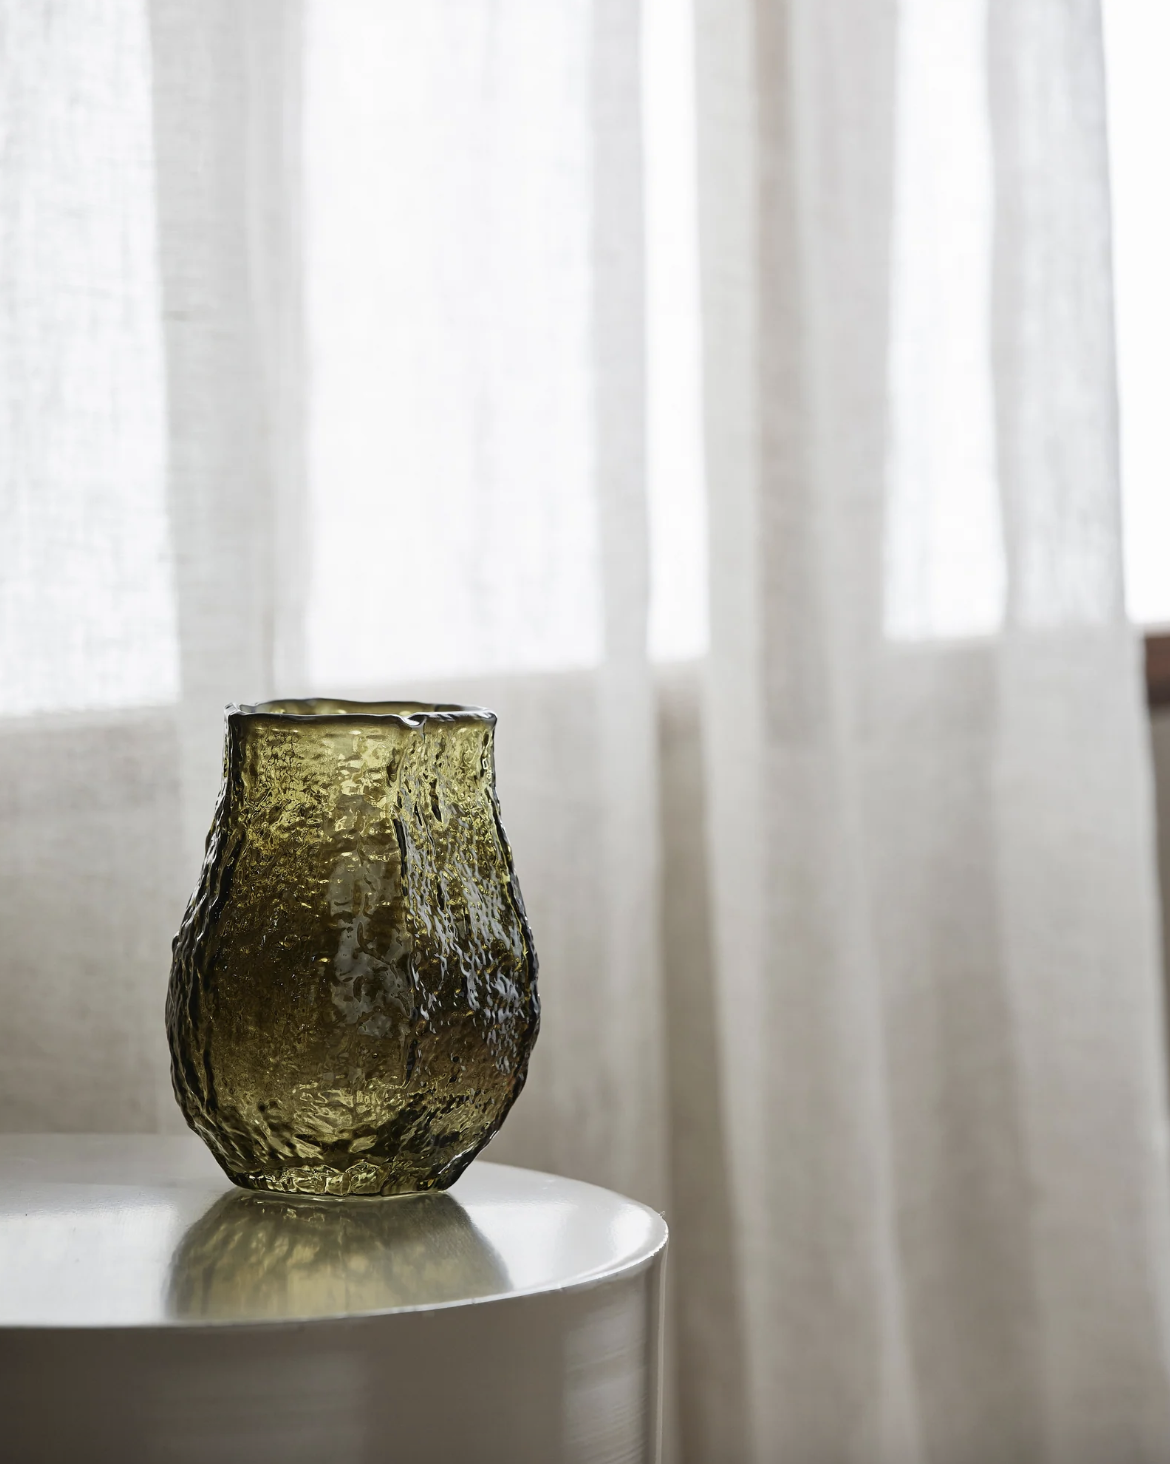 Parry vase, vas i grönt glas med lite bubblig struktur, från Nordal.